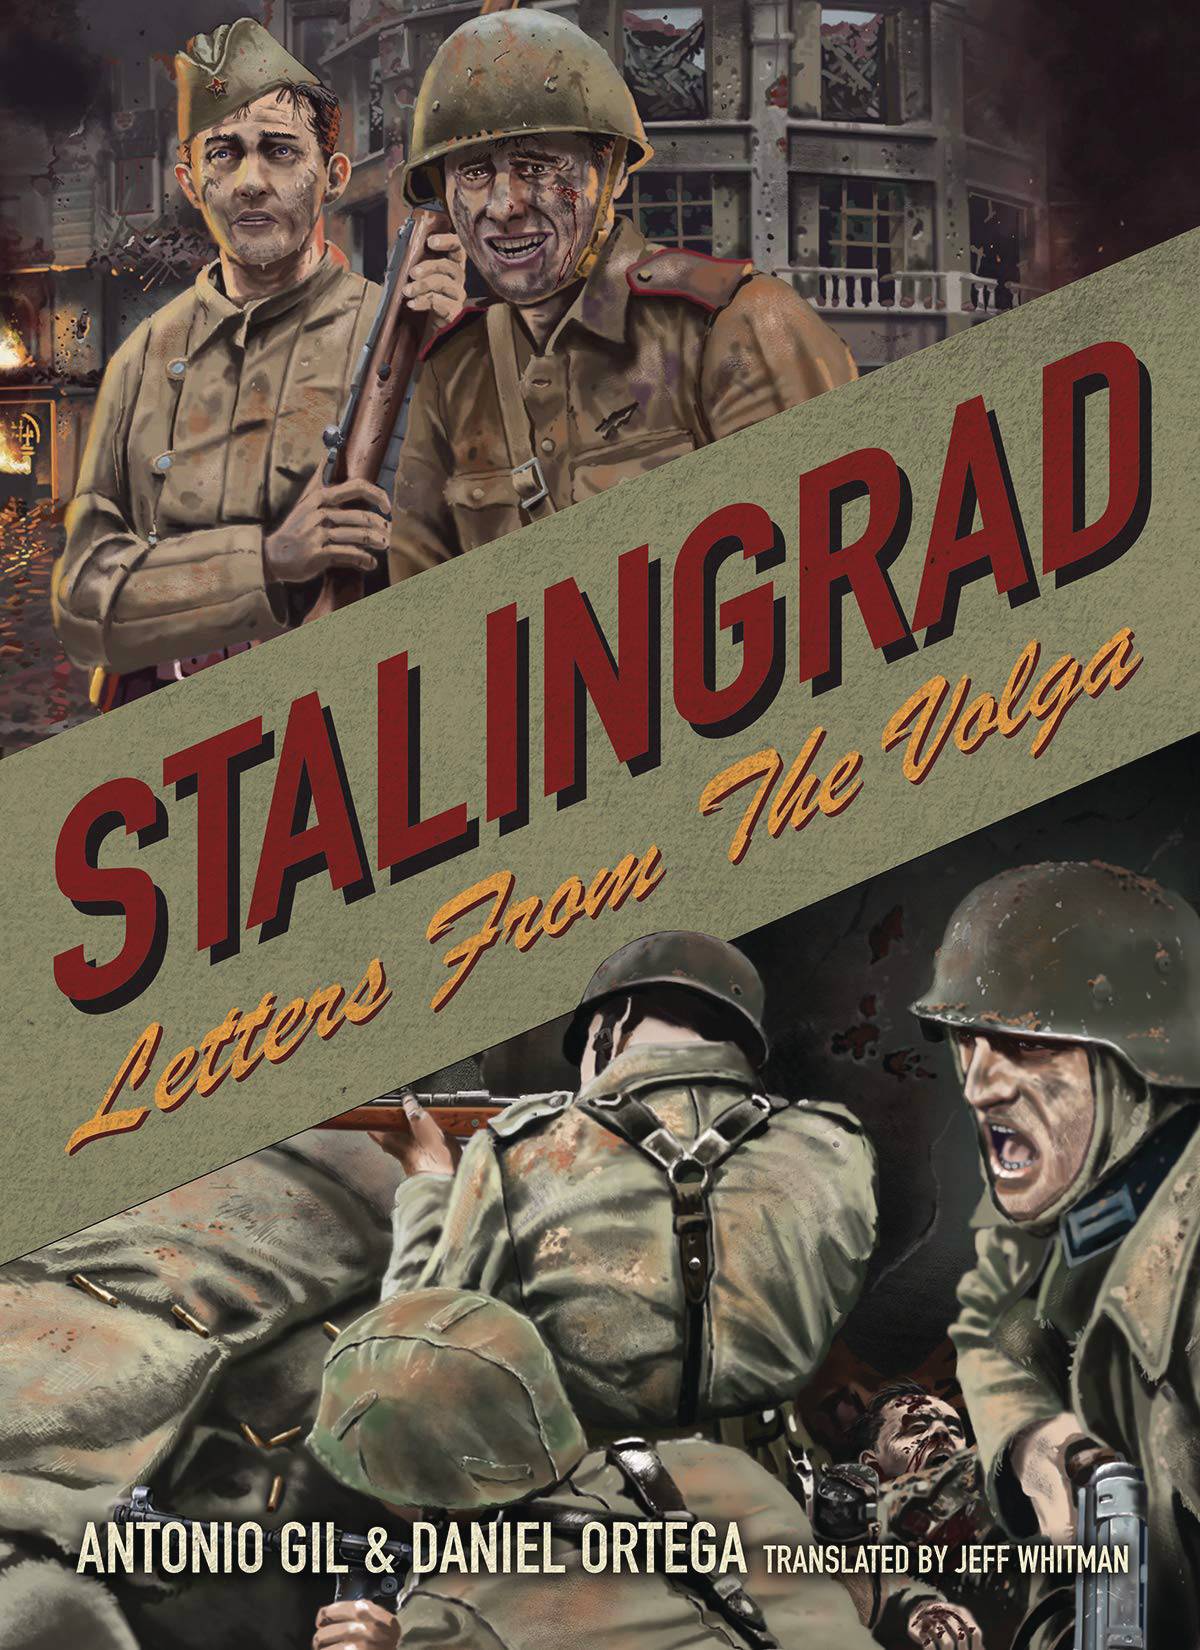 Stalingrad Letters From The Volumega Graphic Novel